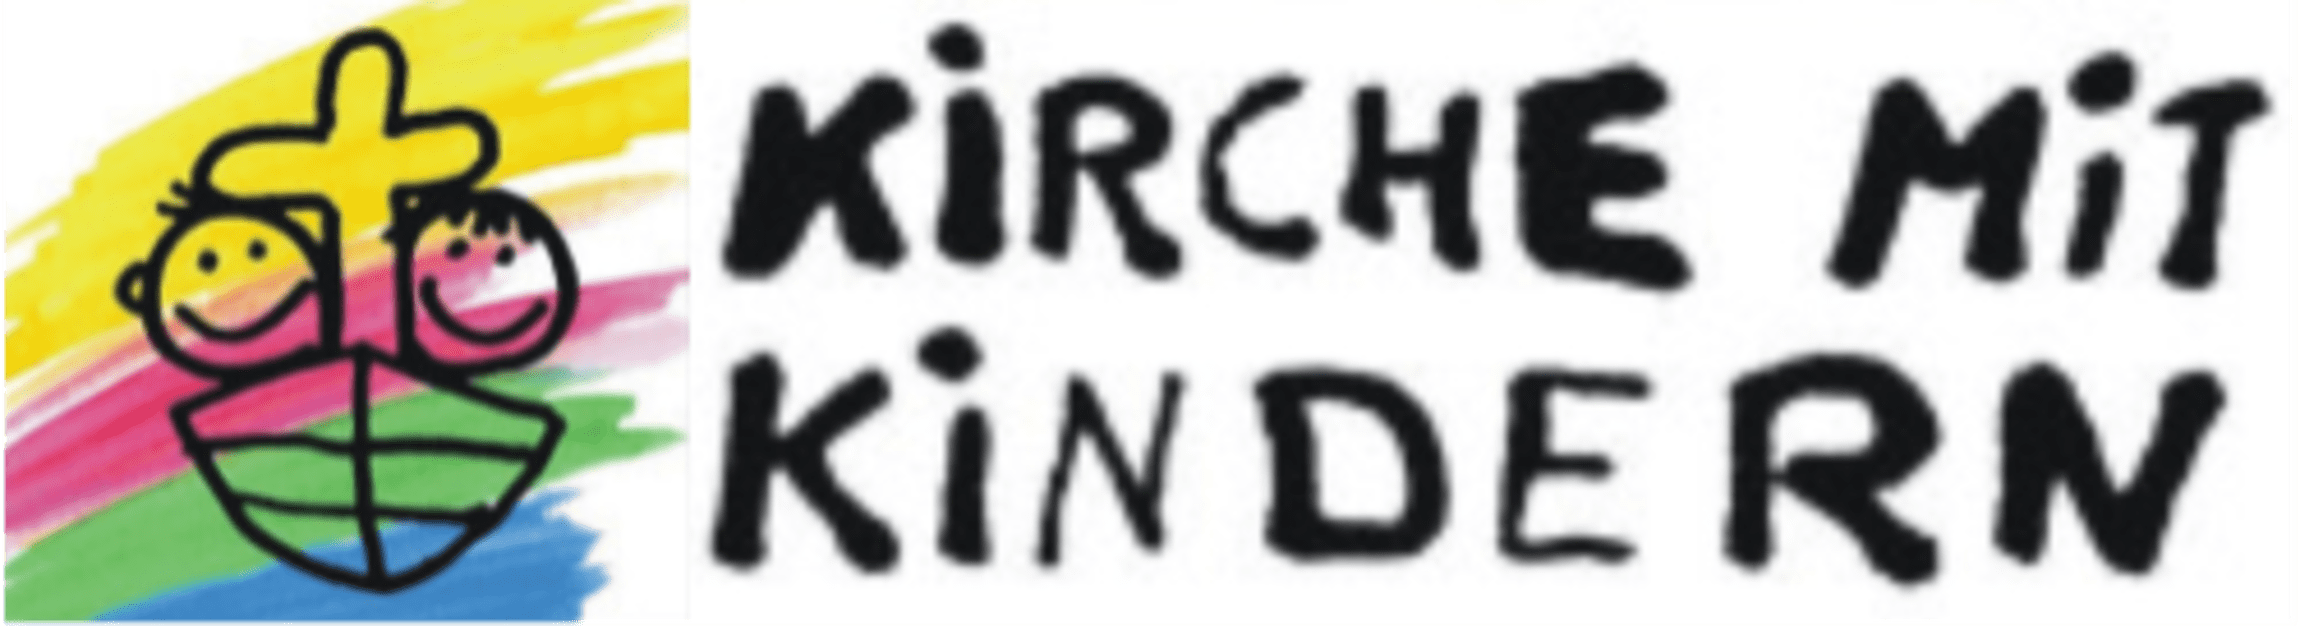 Logo Kirche m Kindern nebeneinander1